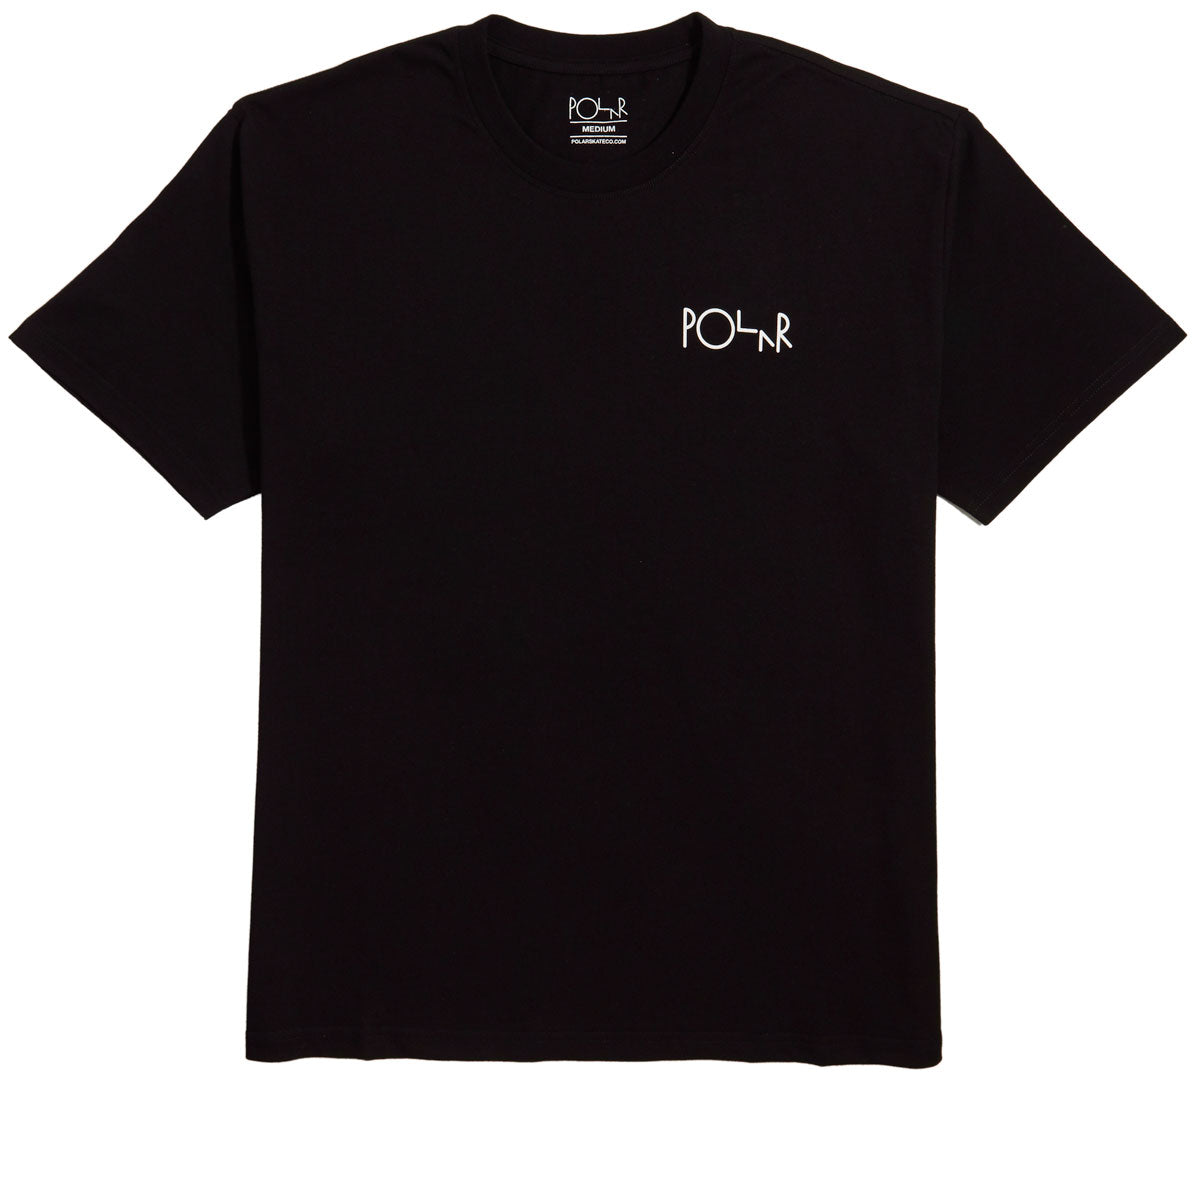 Polar Stroke Logo T-Shirt - Black image 2